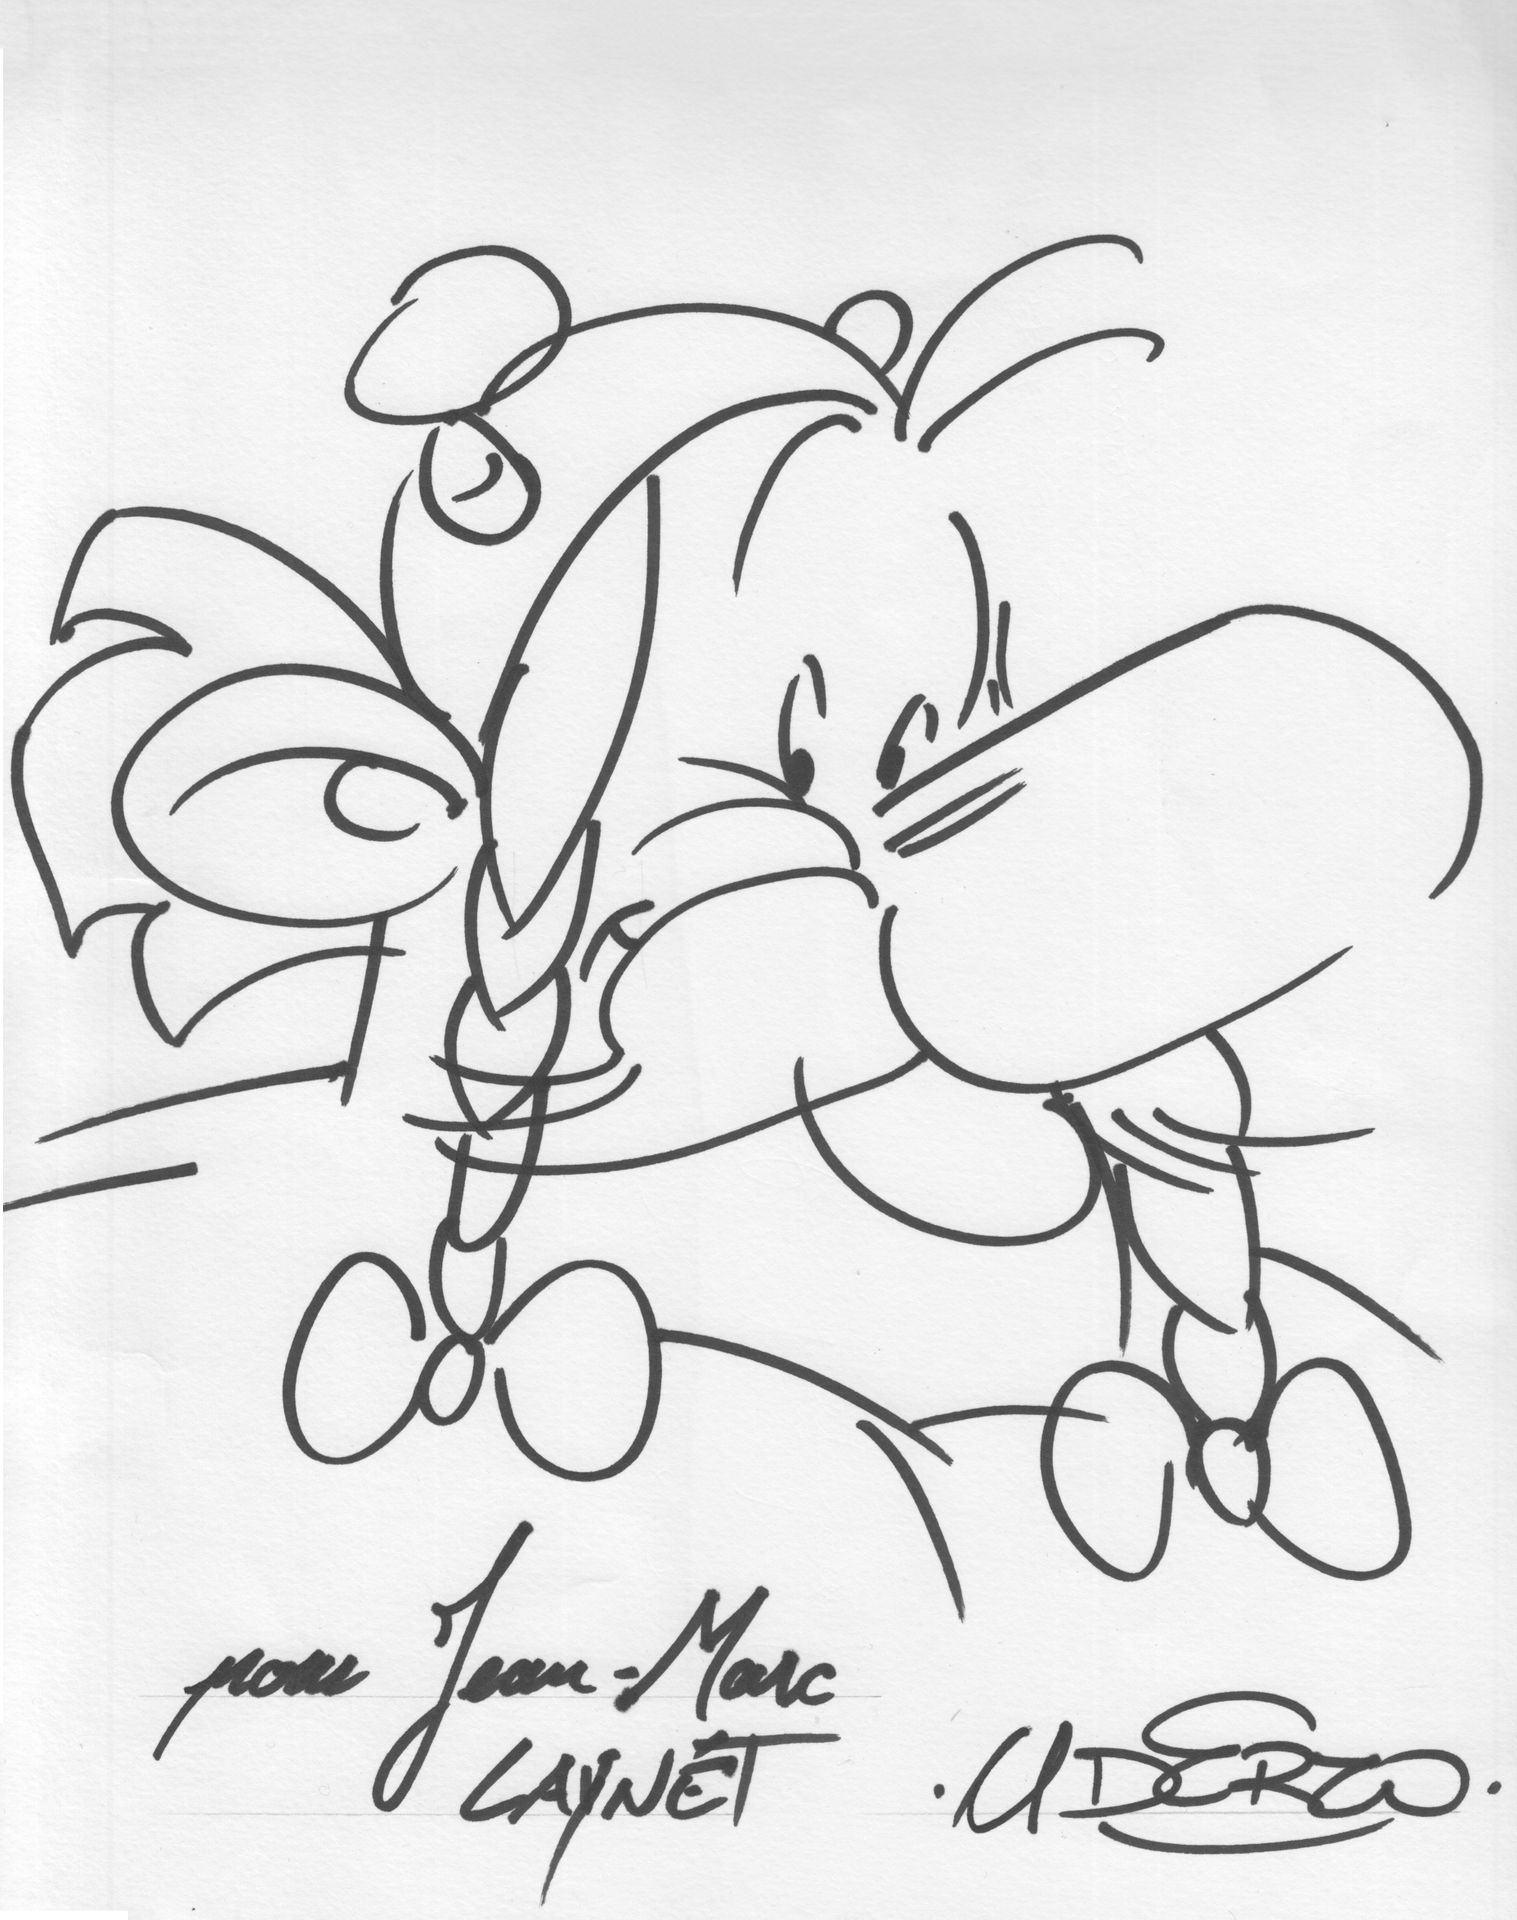 UDERZO, Albert (1927-2020) 康森纸业的黑色毡尖画原作。图画上有乌德索的签名和献词。80年代末。

尺寸：32 x 24厘米。